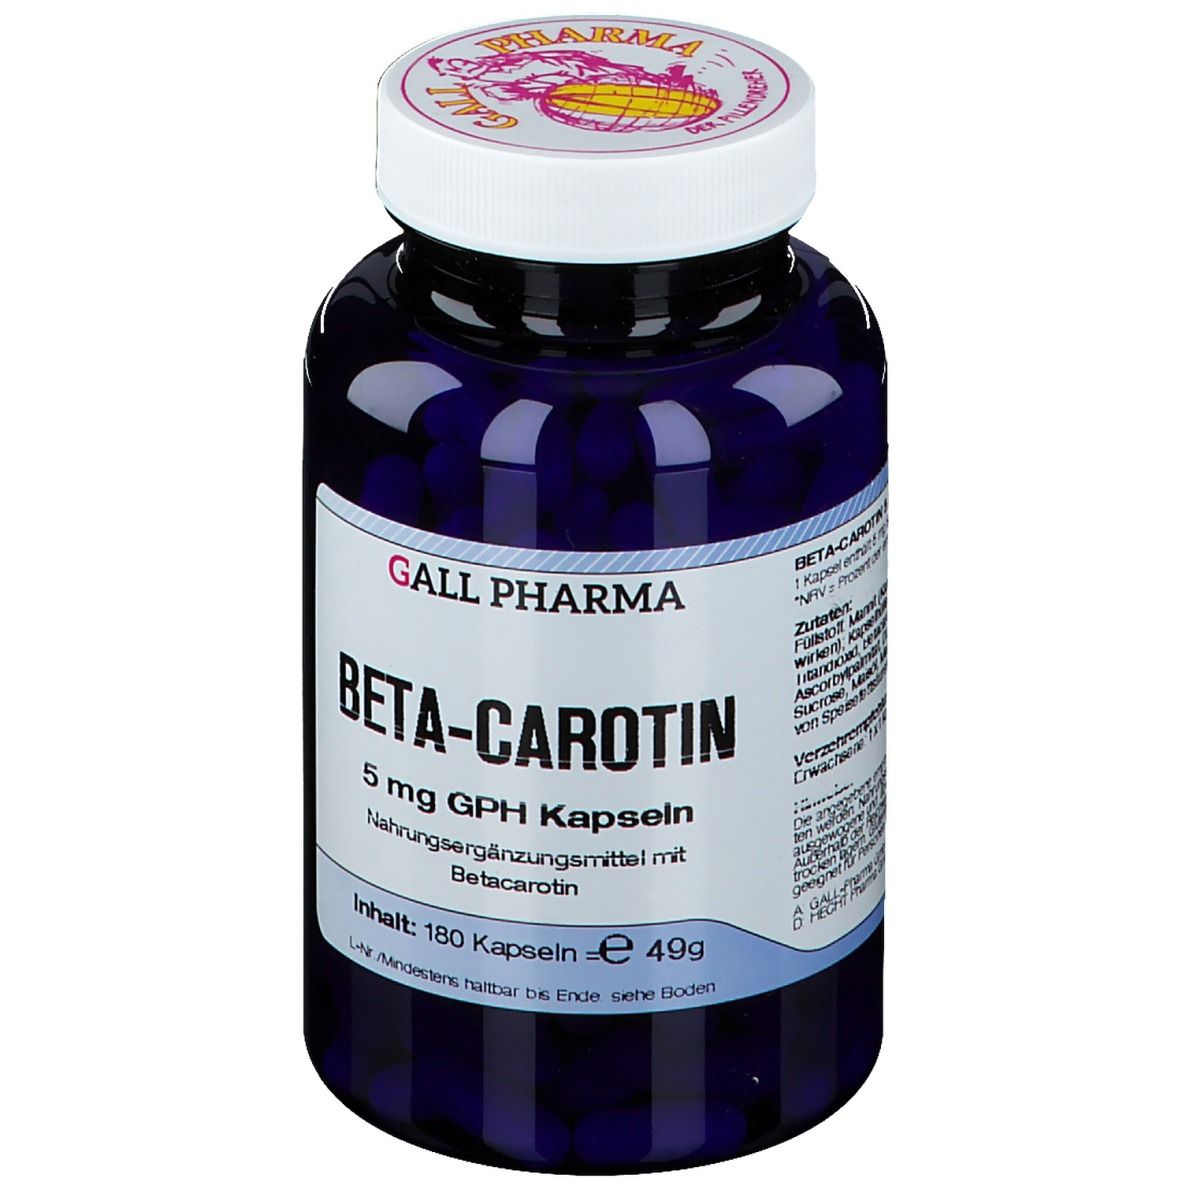 GALL PHARMA Beta-Carotin 5 mg GPH Kapseln